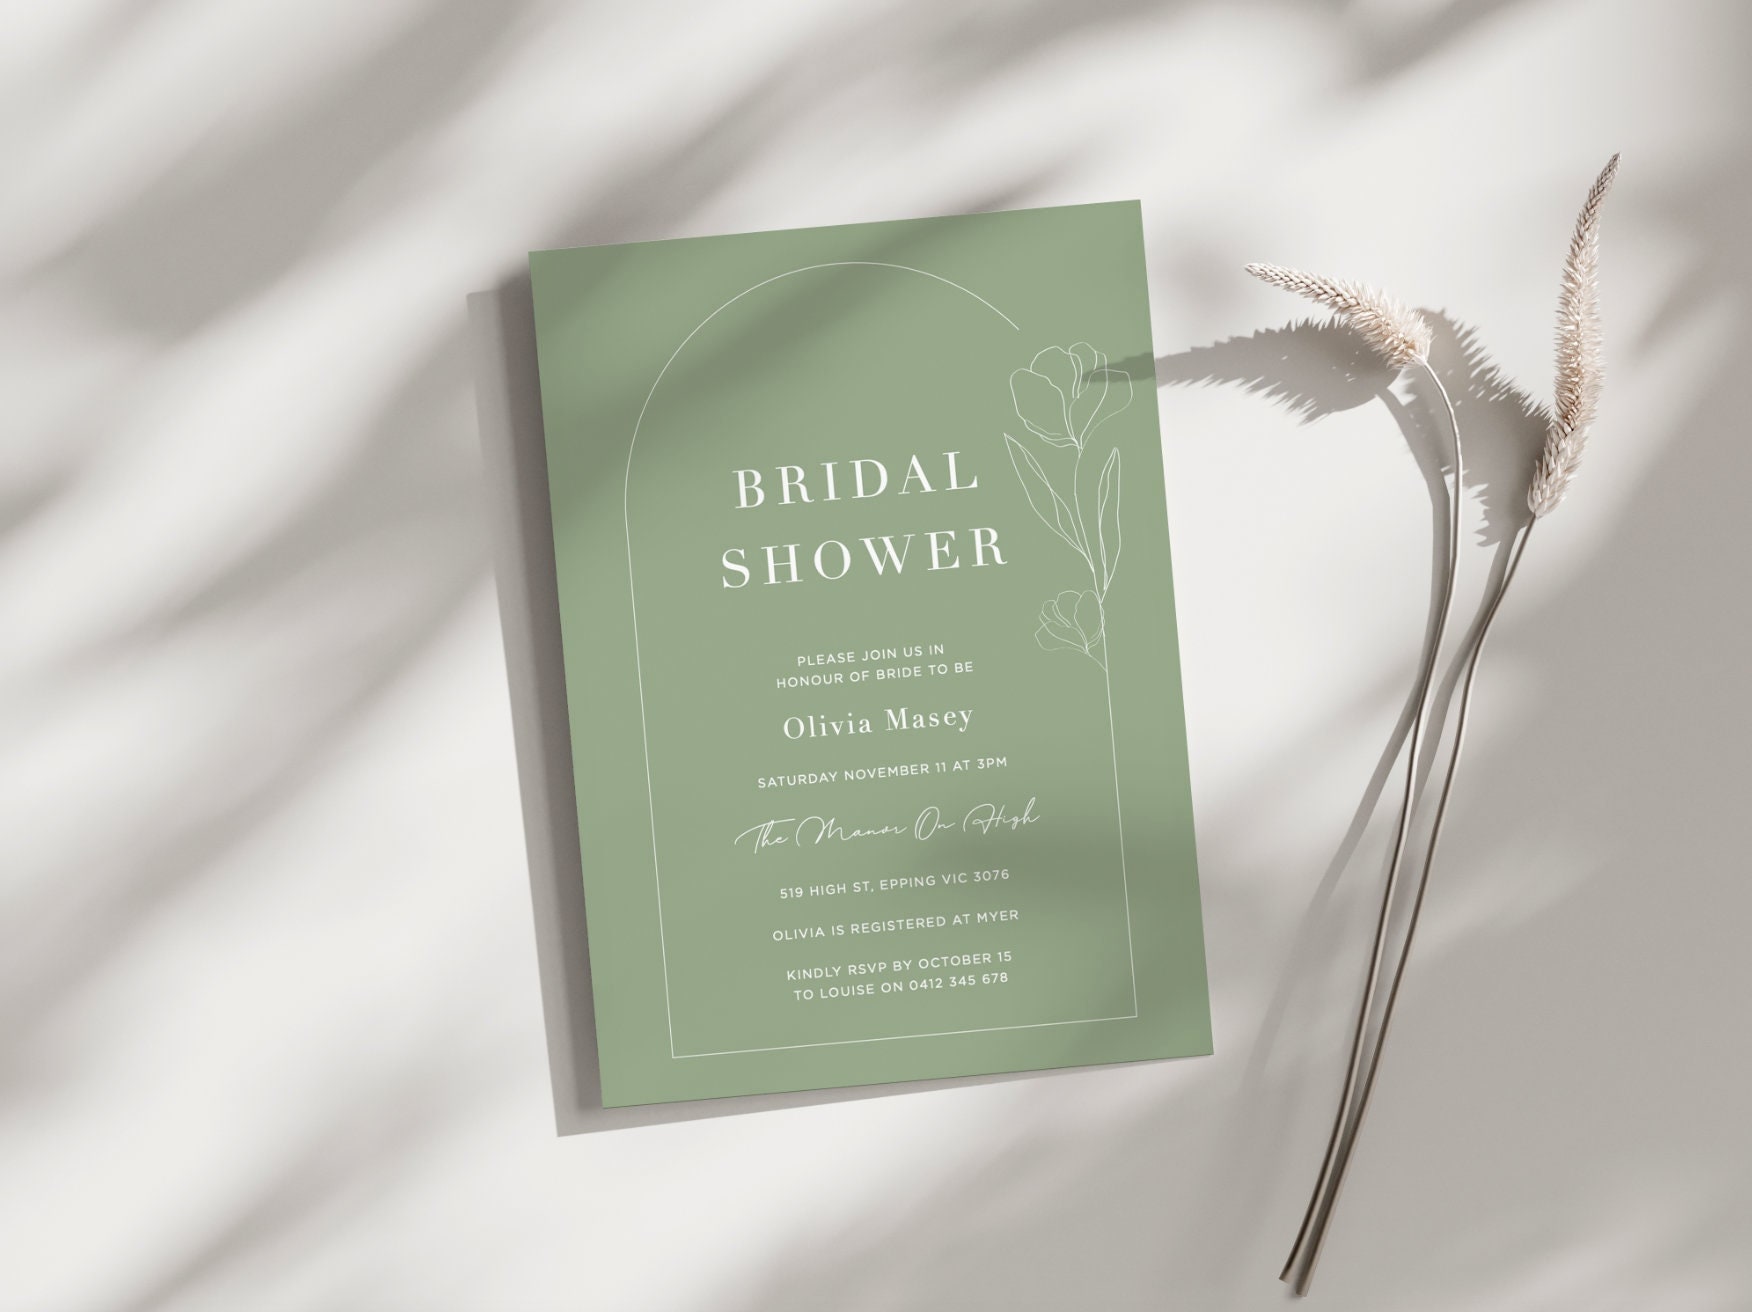 The Nightmare Before Christmas Bridal Shower Games Bridal Shower Bundle,  Game Set / Printable 